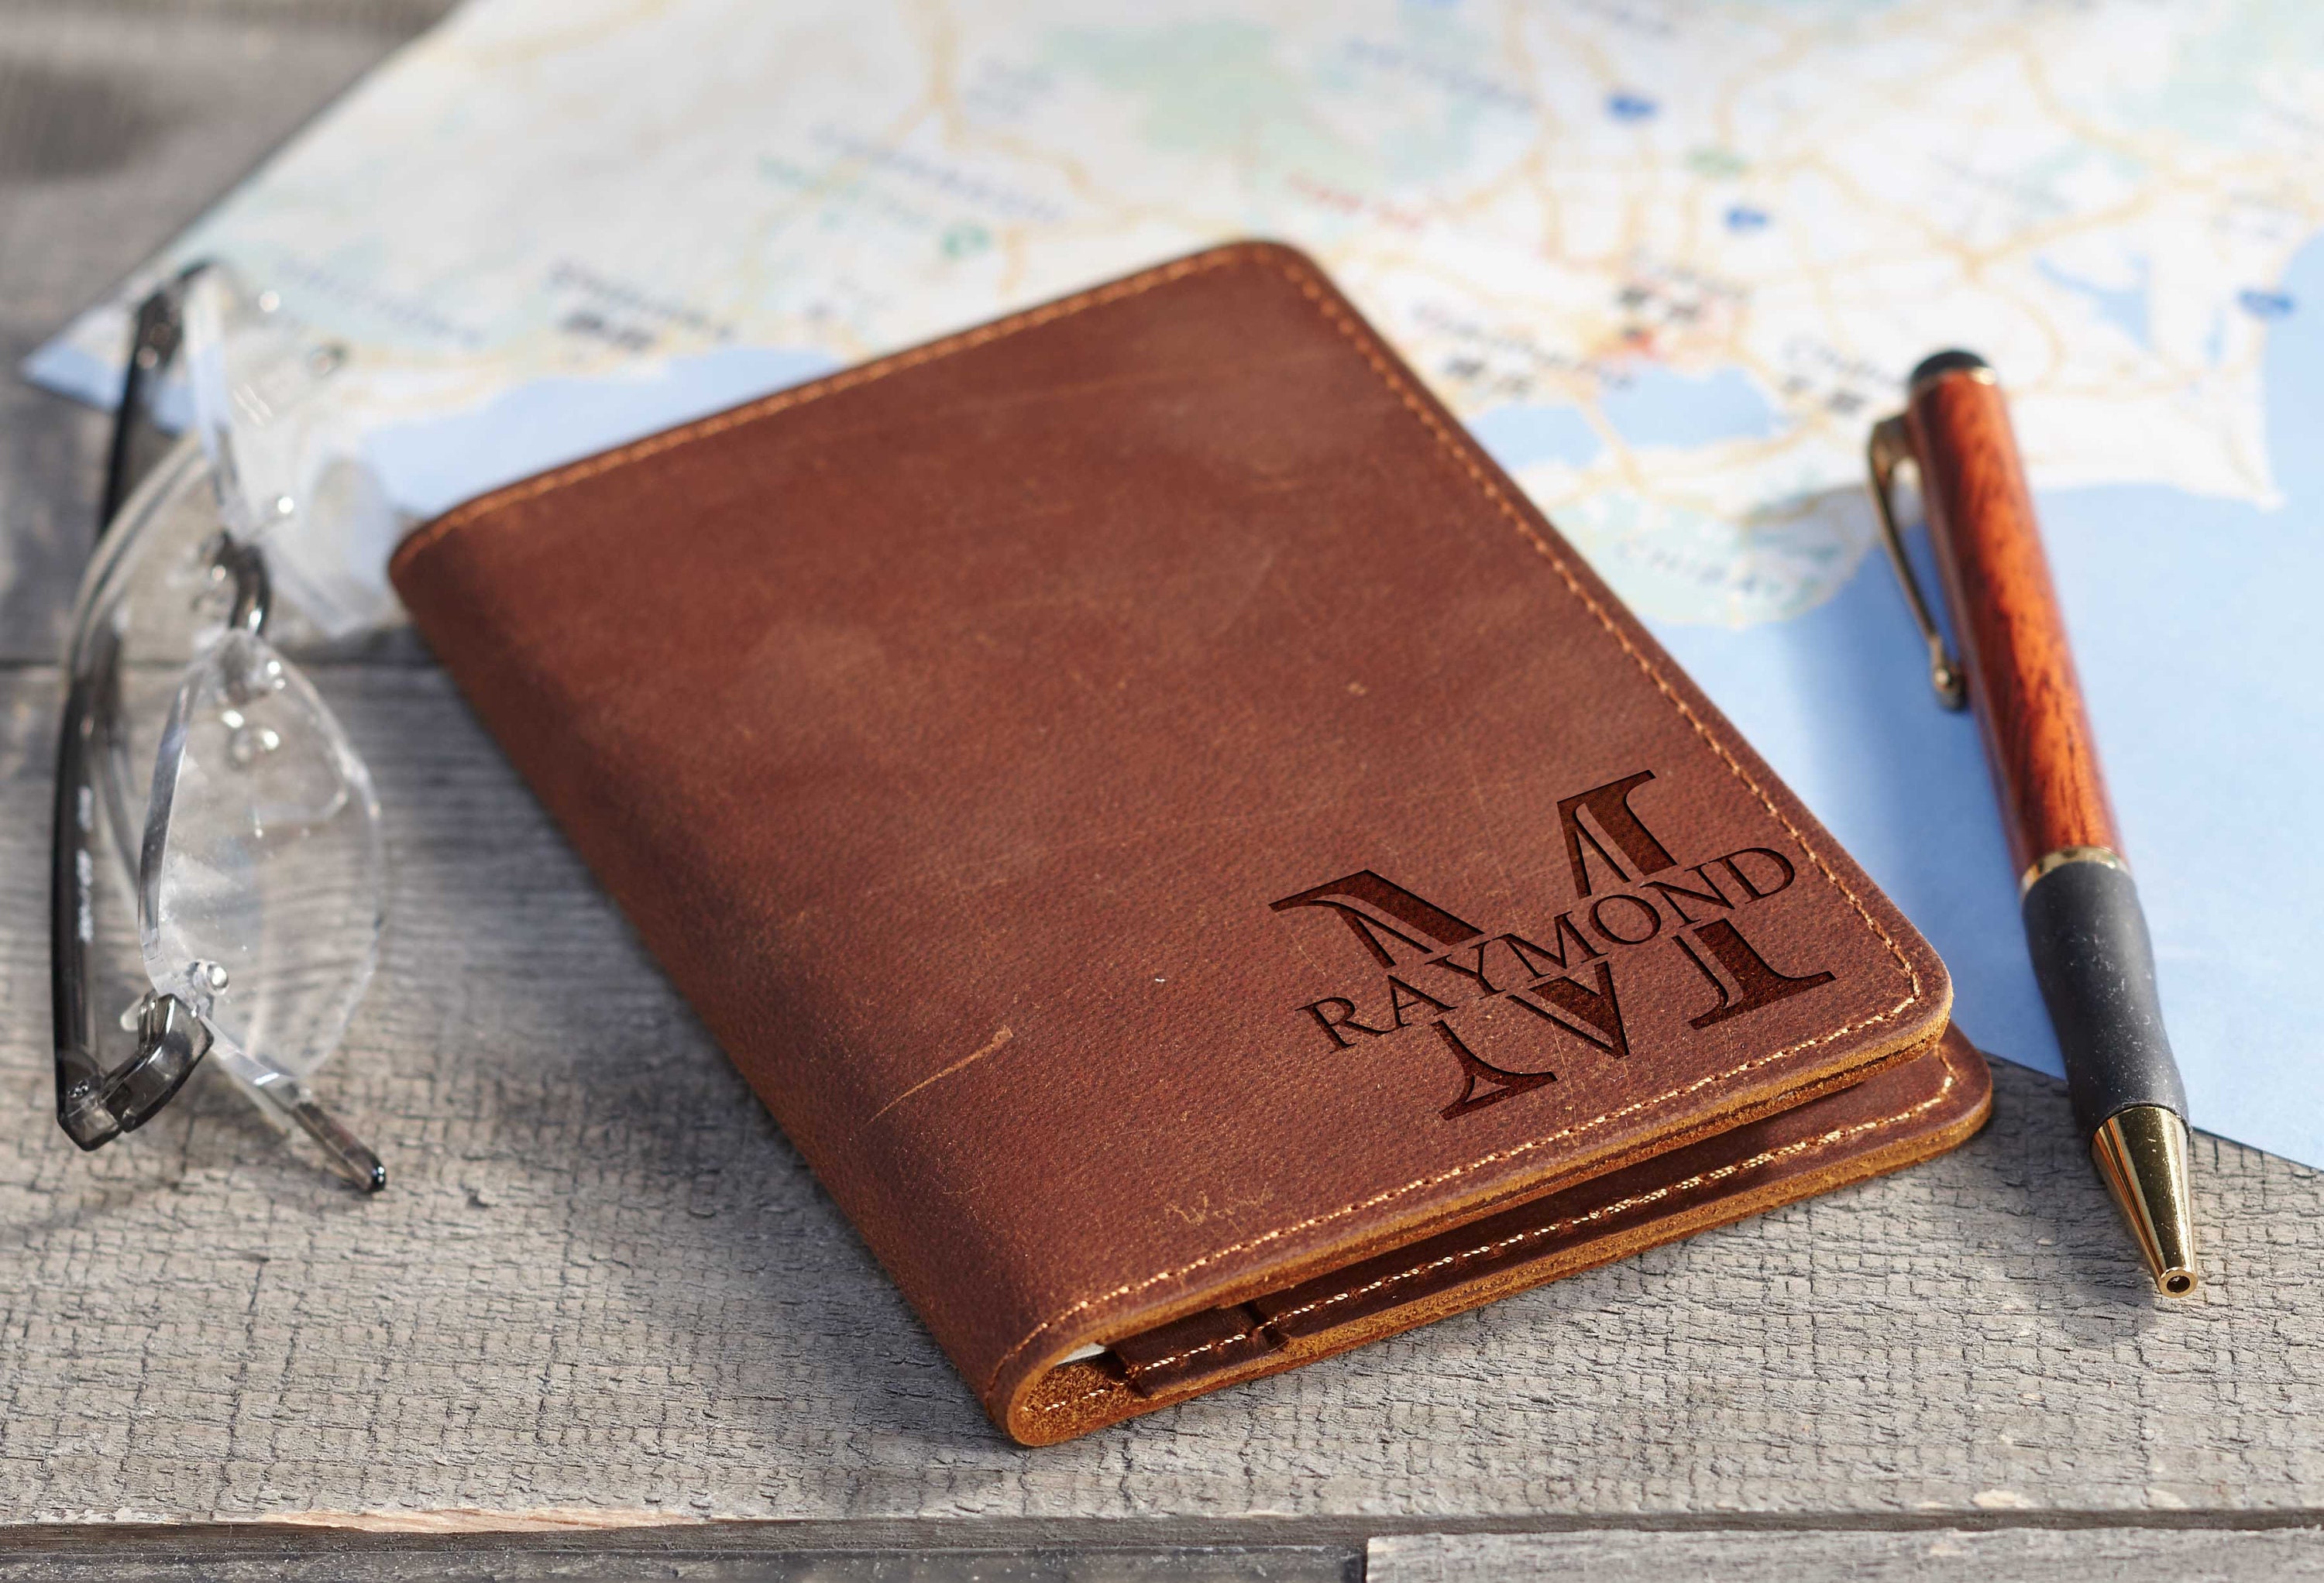 Personalized Passport Cover - Premium Leather